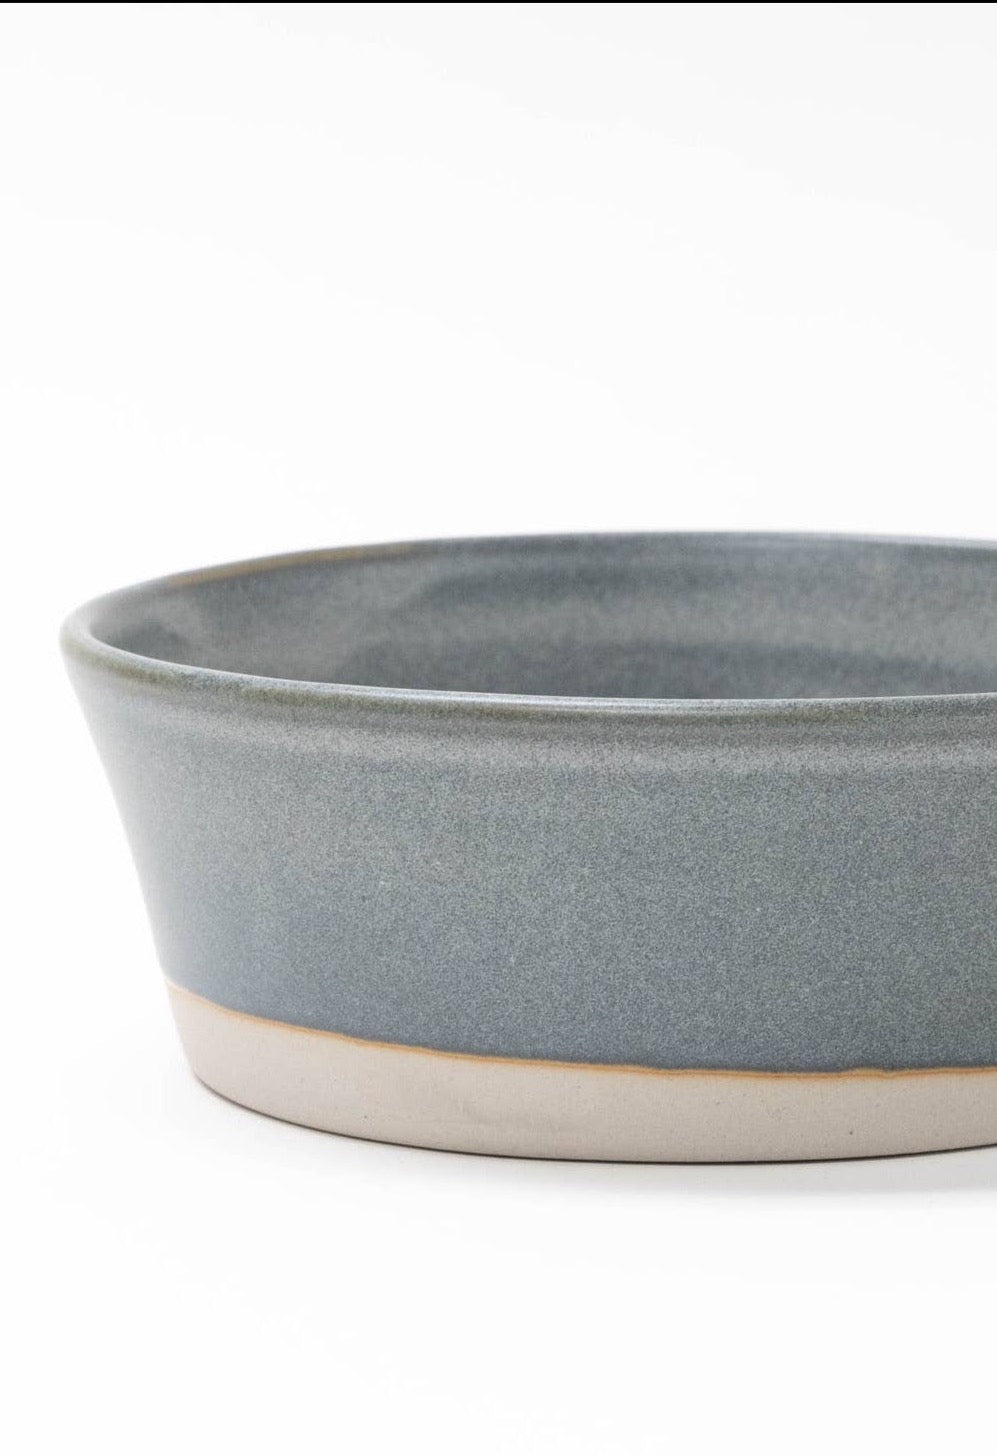 WRF Ceramics | Deep Bowl: Large